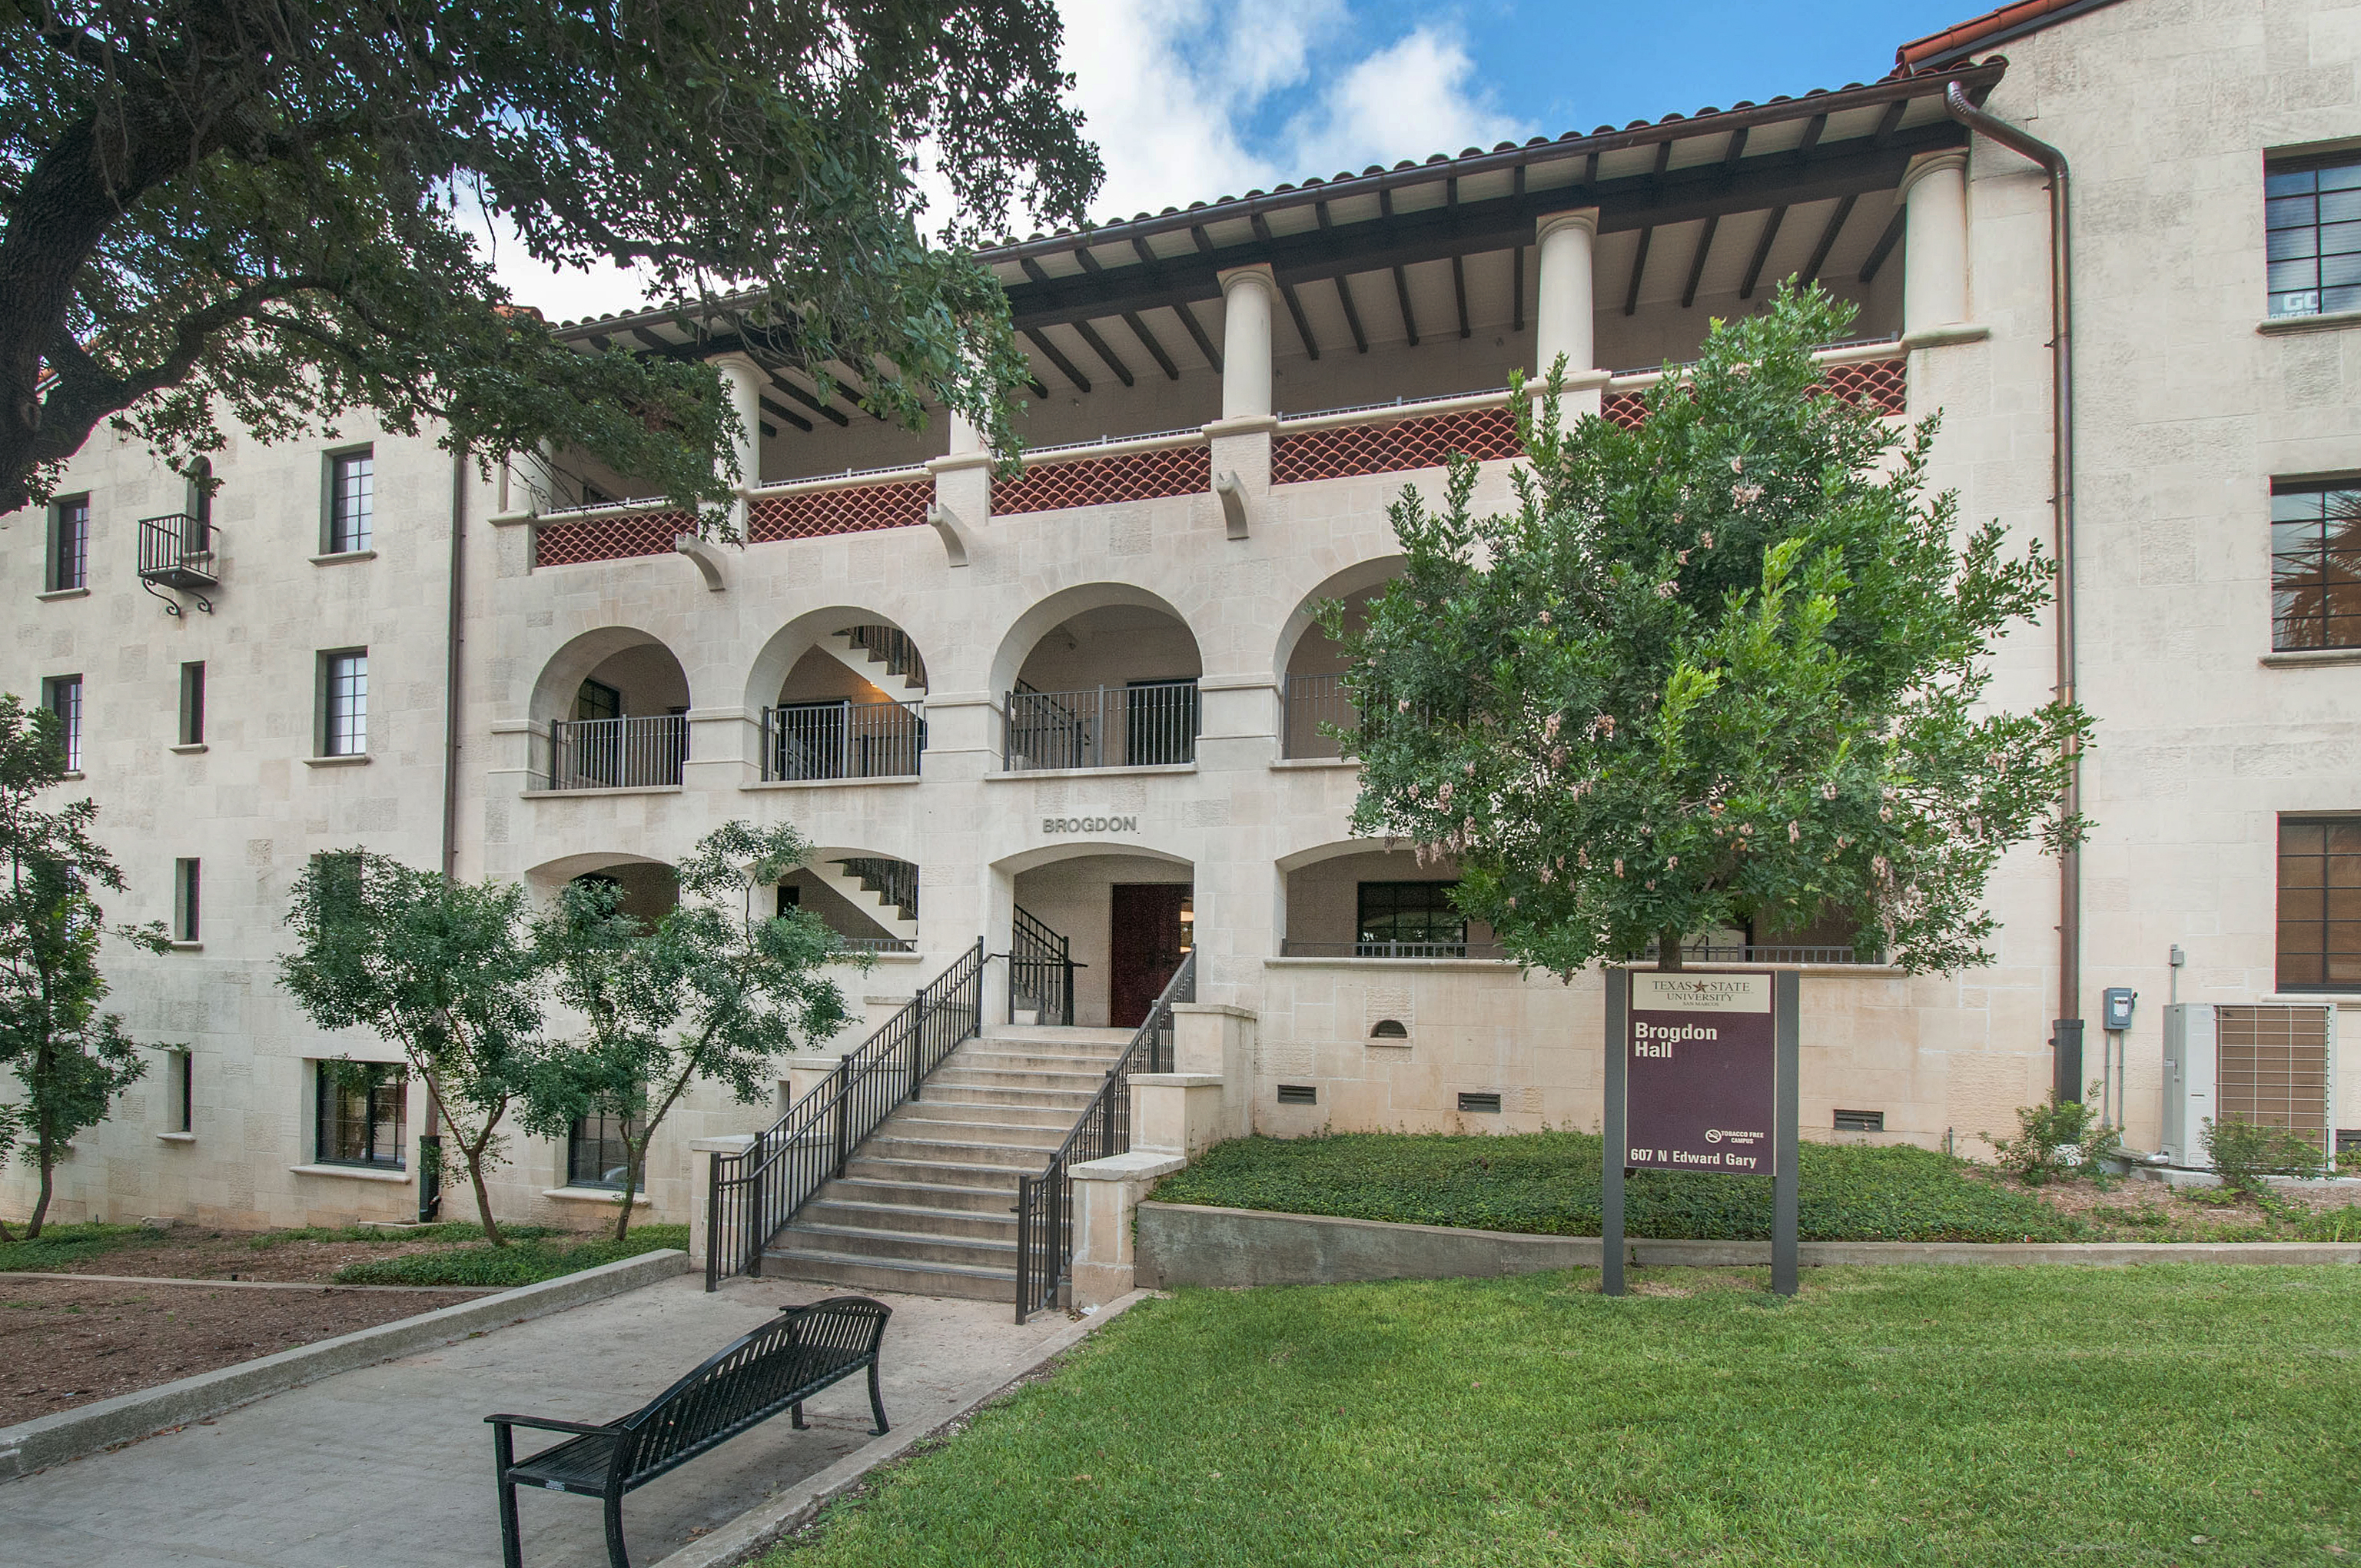  Texas State University | Brogdon Hall category